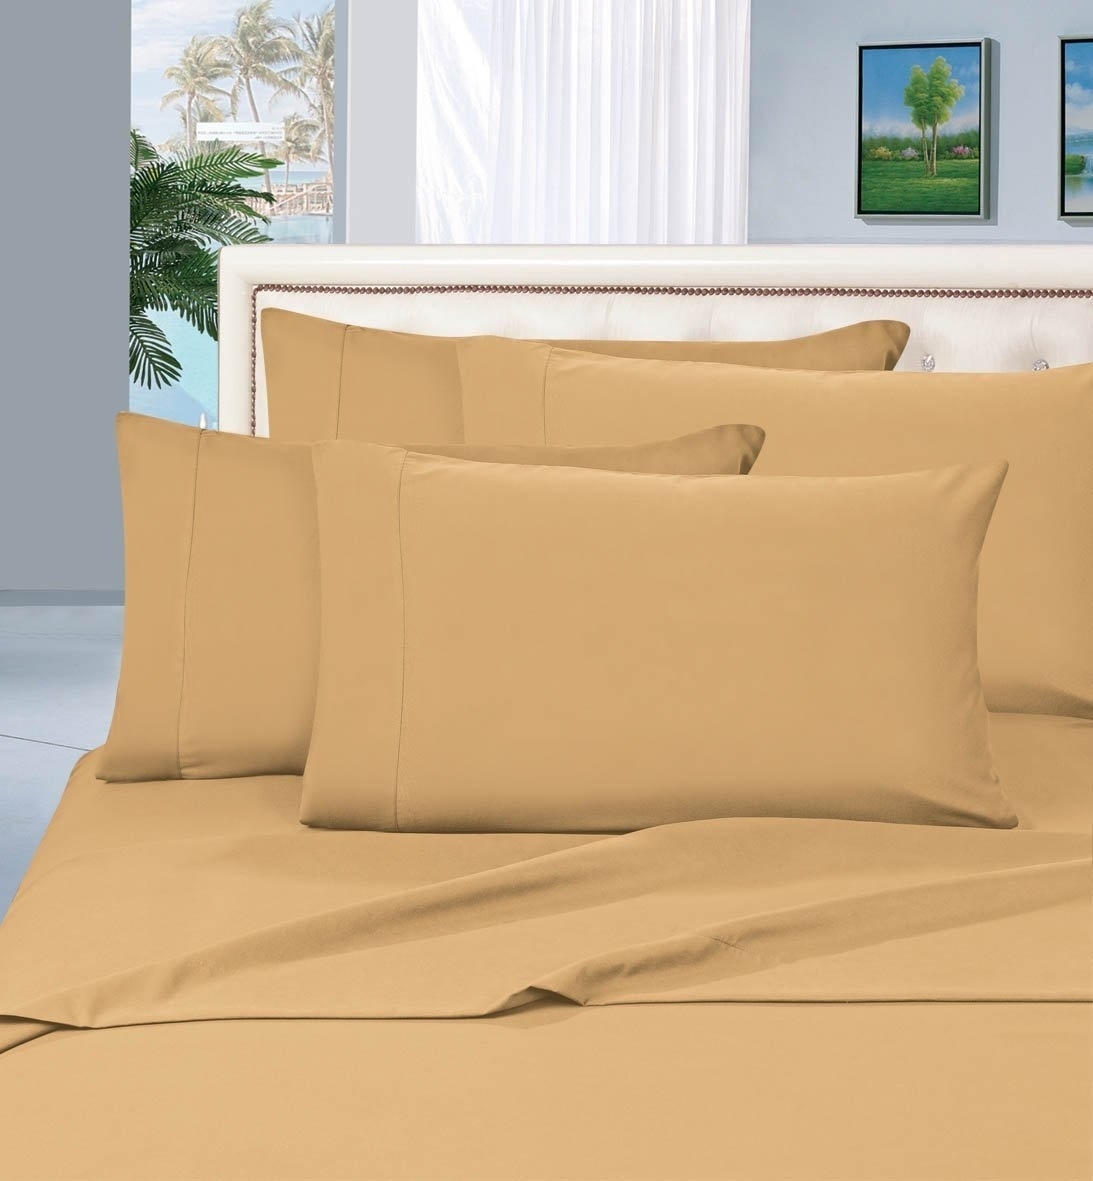 Elegant Comfort 1500 Series Wrinkle Resistant Egyptian Quality Hypoallergenic Ultra Soft Luxury 4-piece Sheet Set, California King, Gold